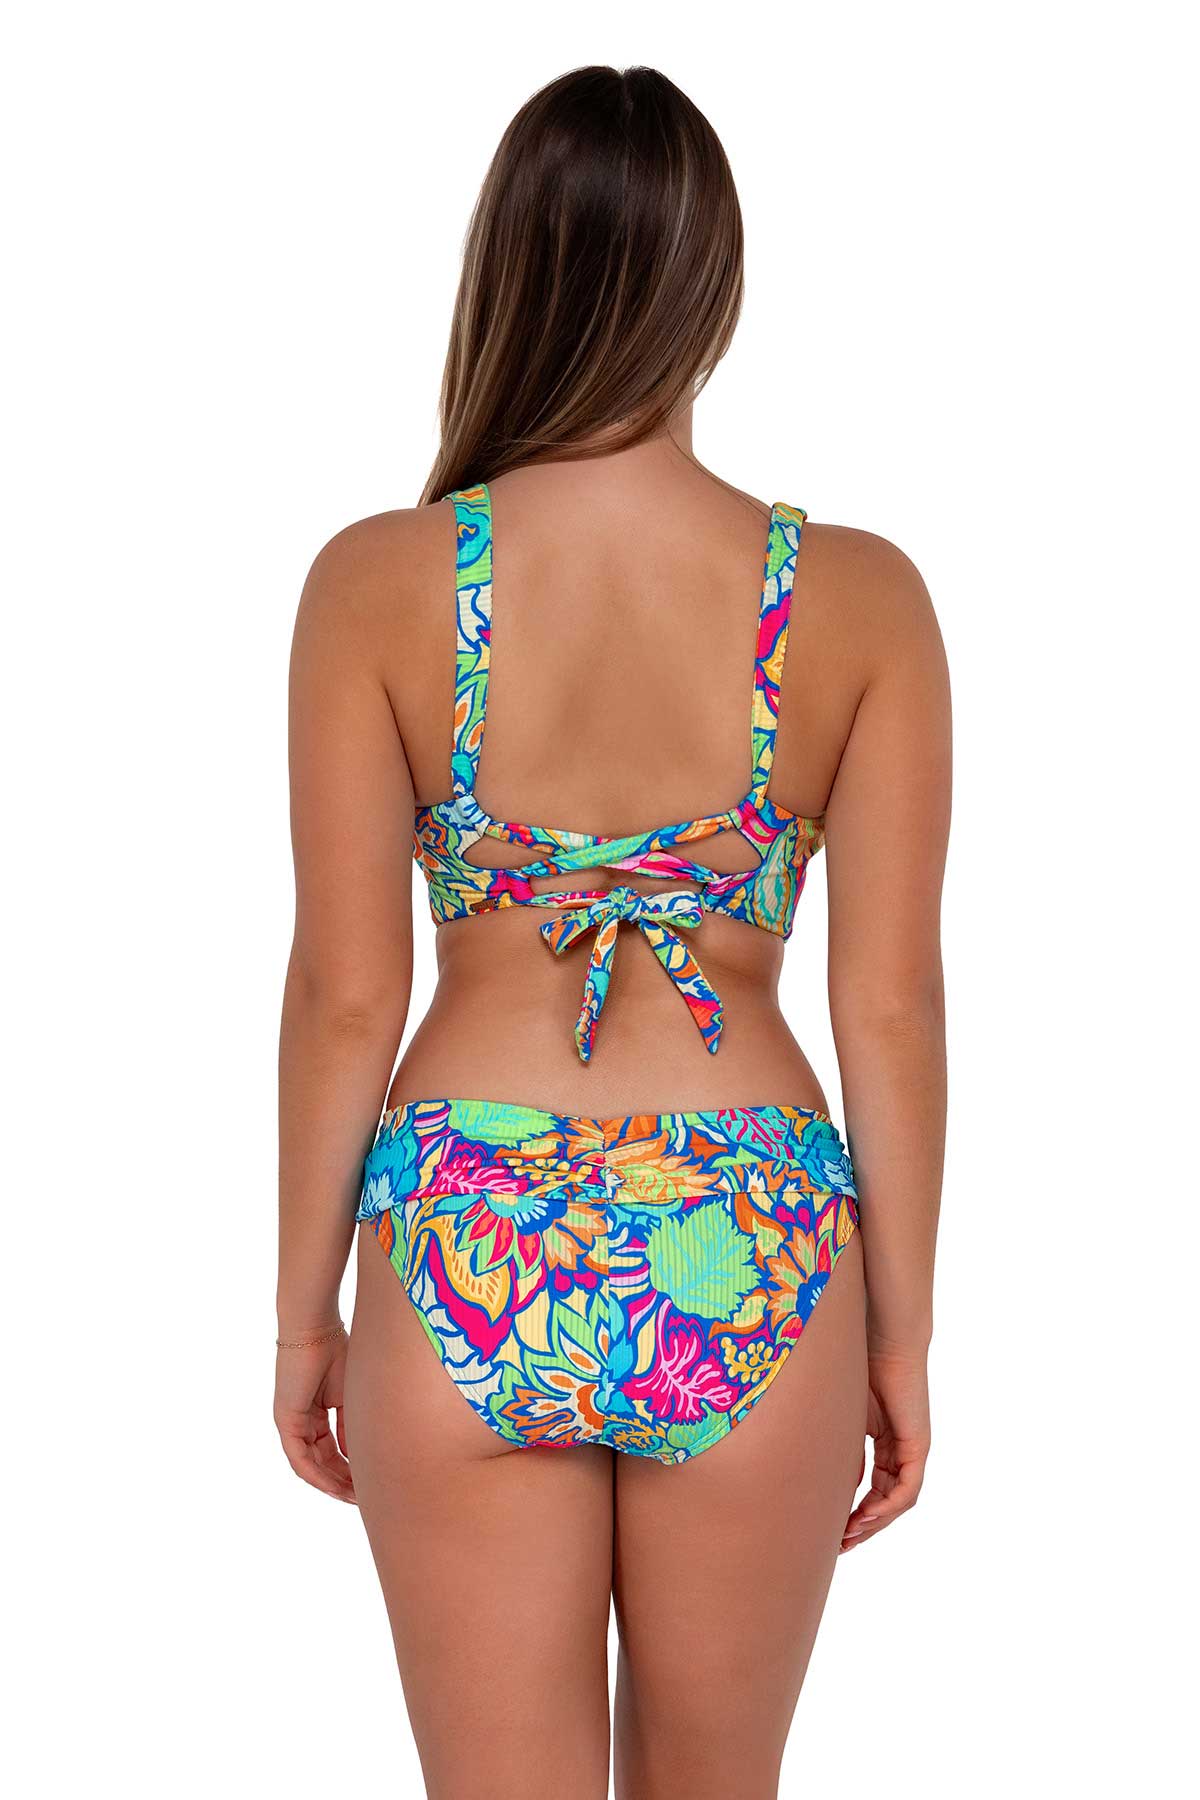 Sunsets Women's Printed Kauai Underwire Bralette Bikini Top - 54P 34DD Lush  Luau